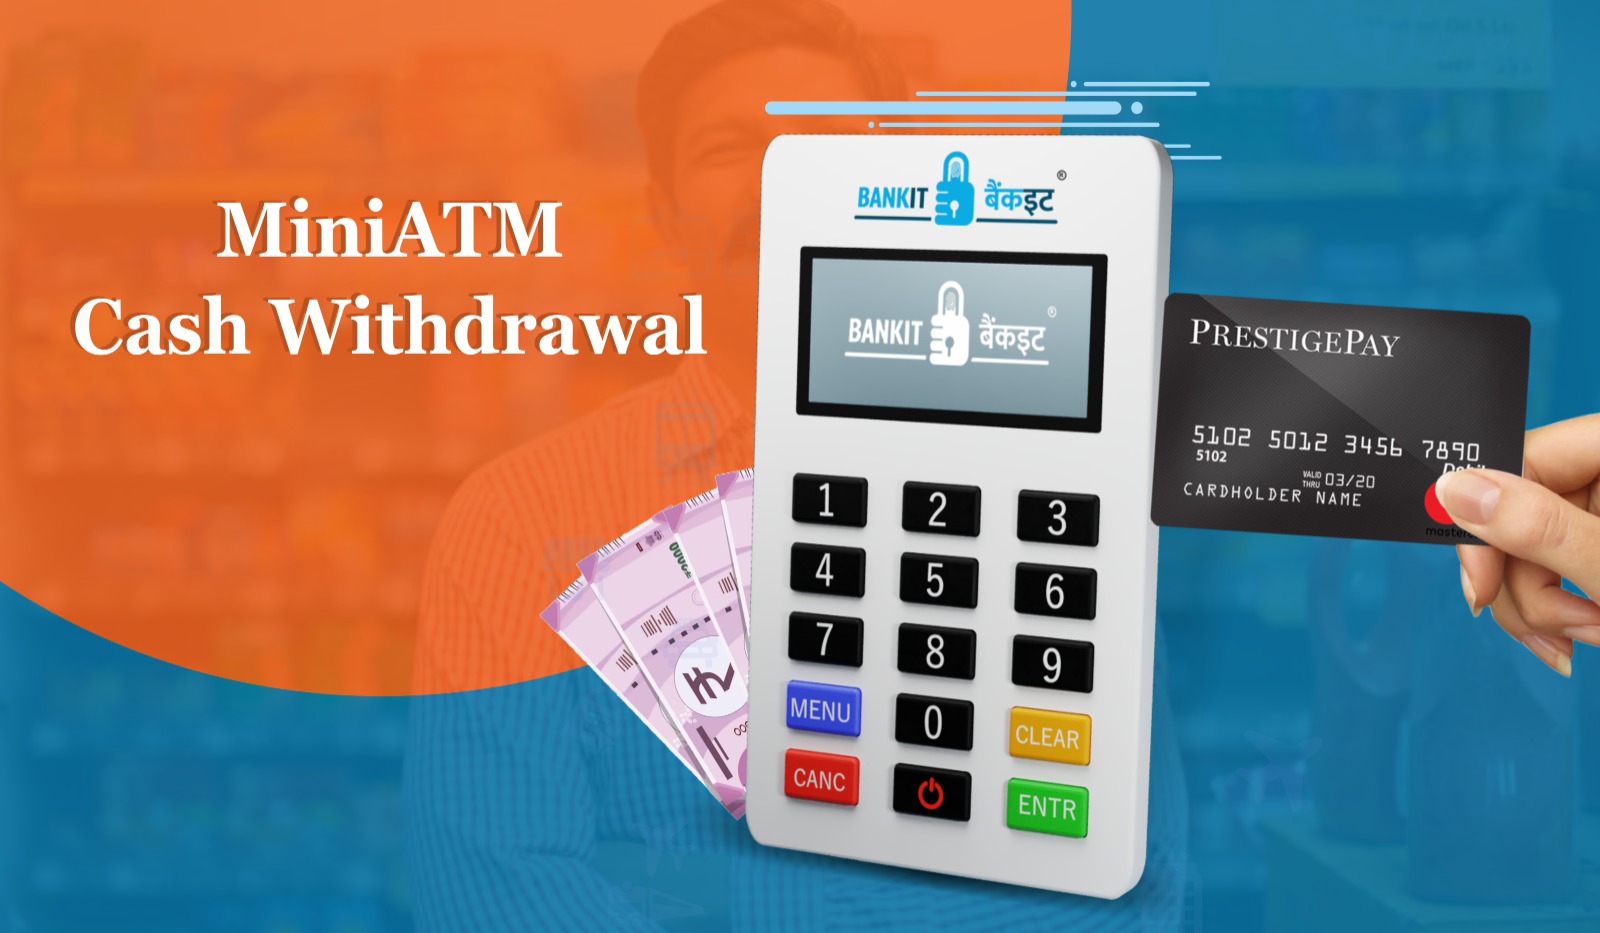 MiniATM Cash Withdrawal using Debit Card